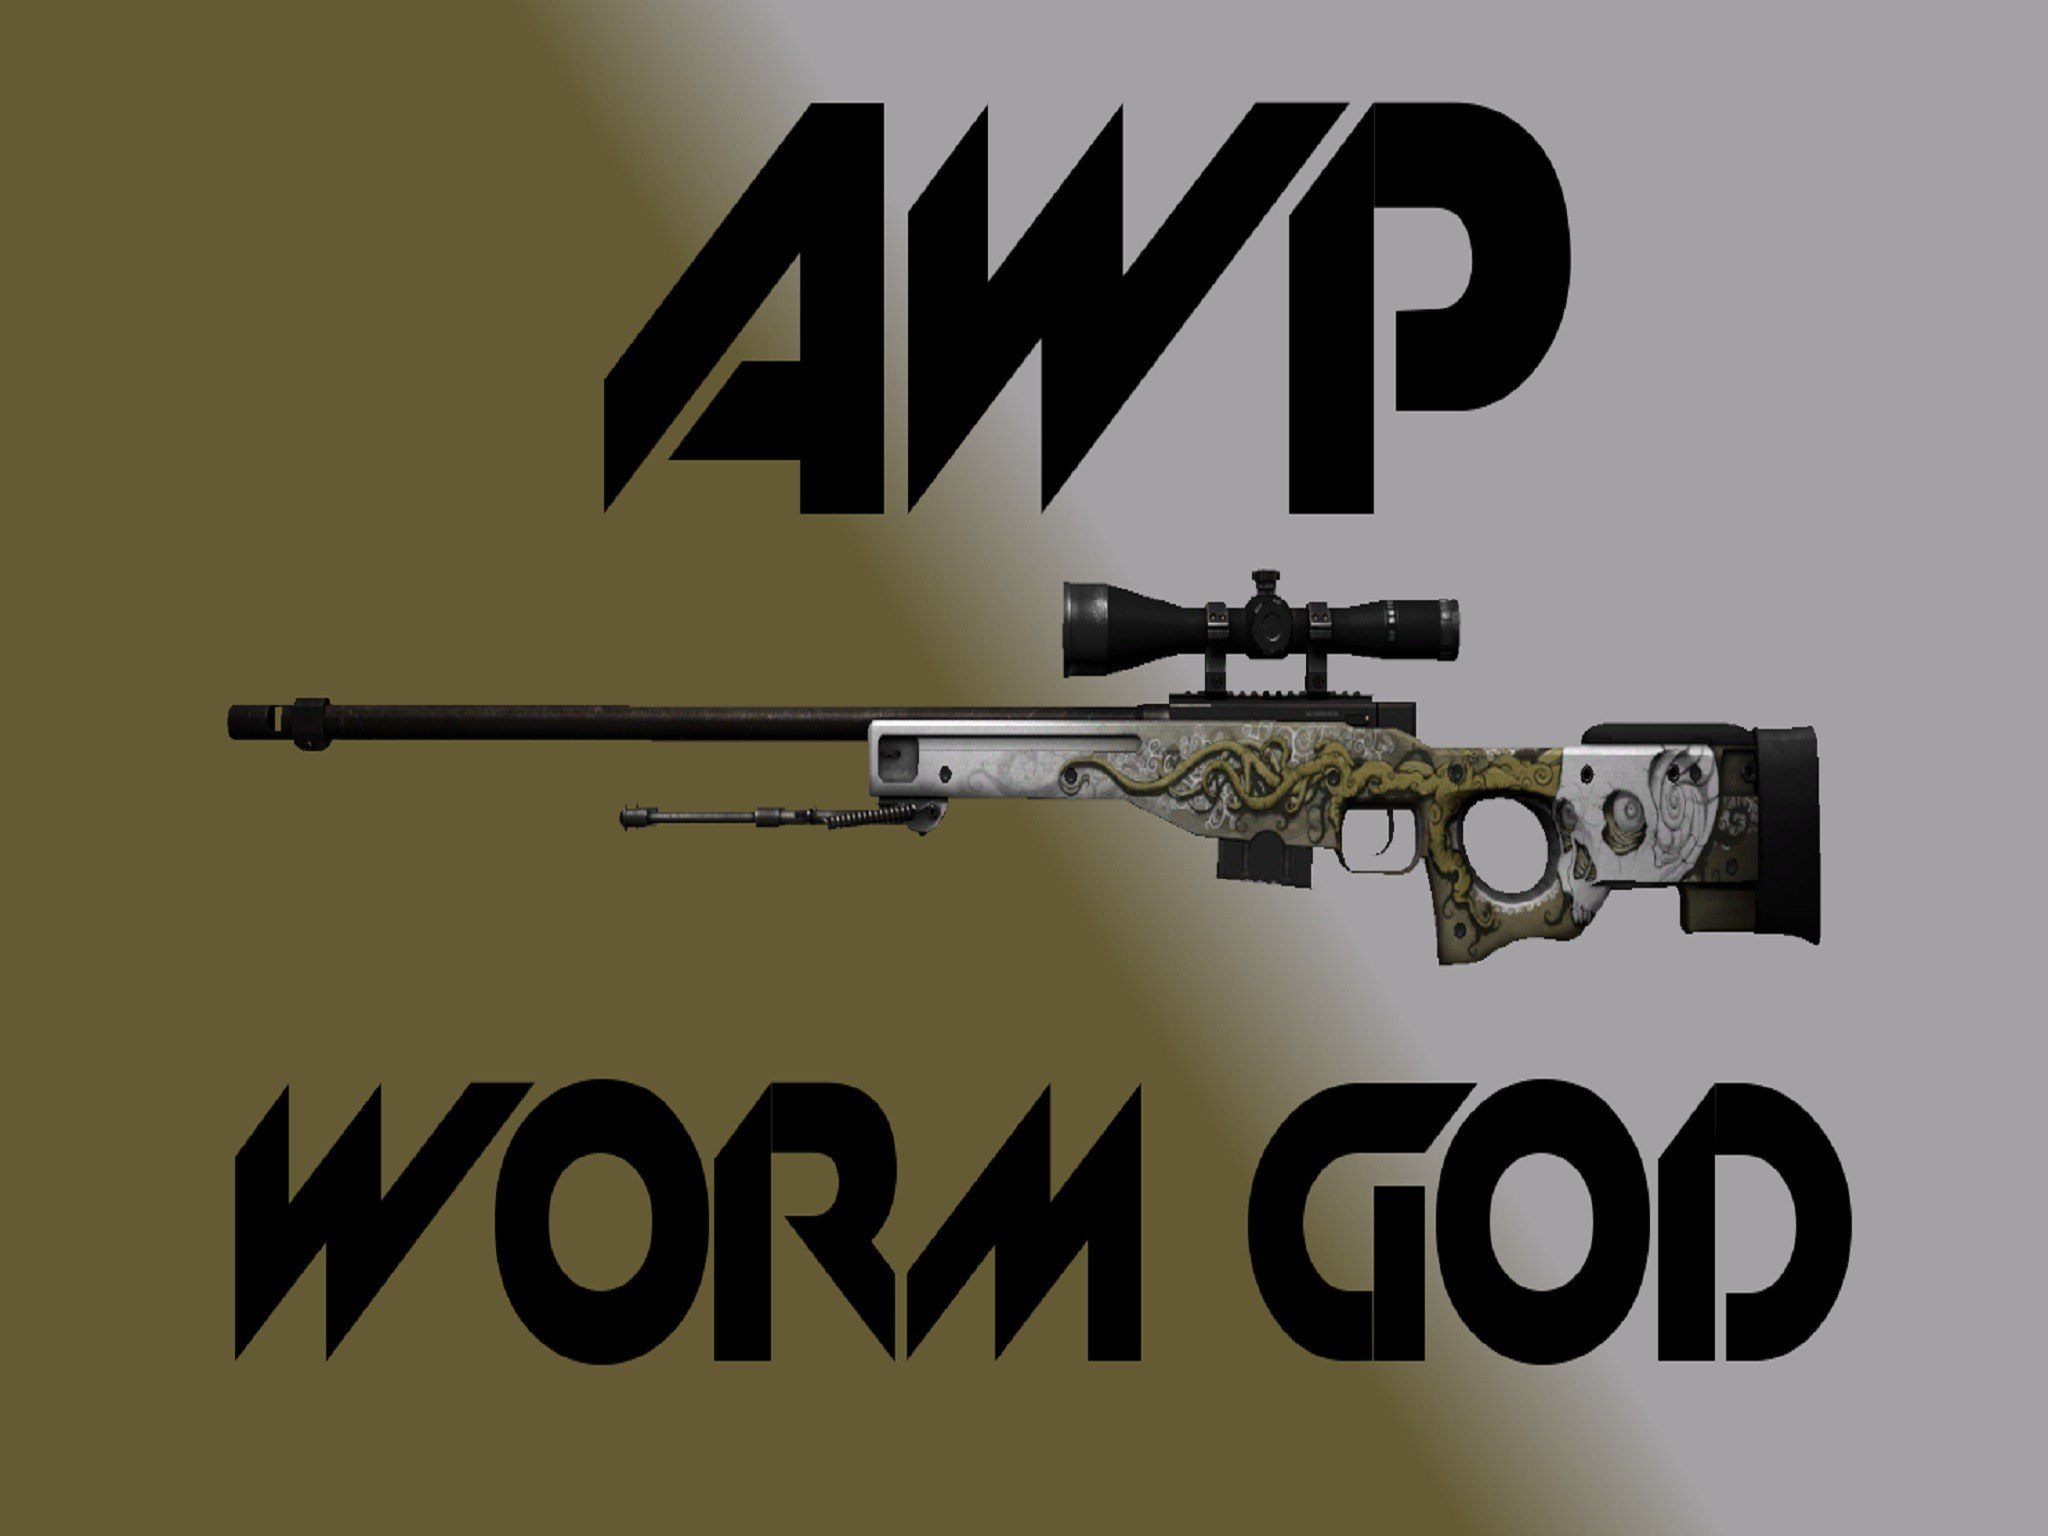 Worm god awp worm god field tested фото 27